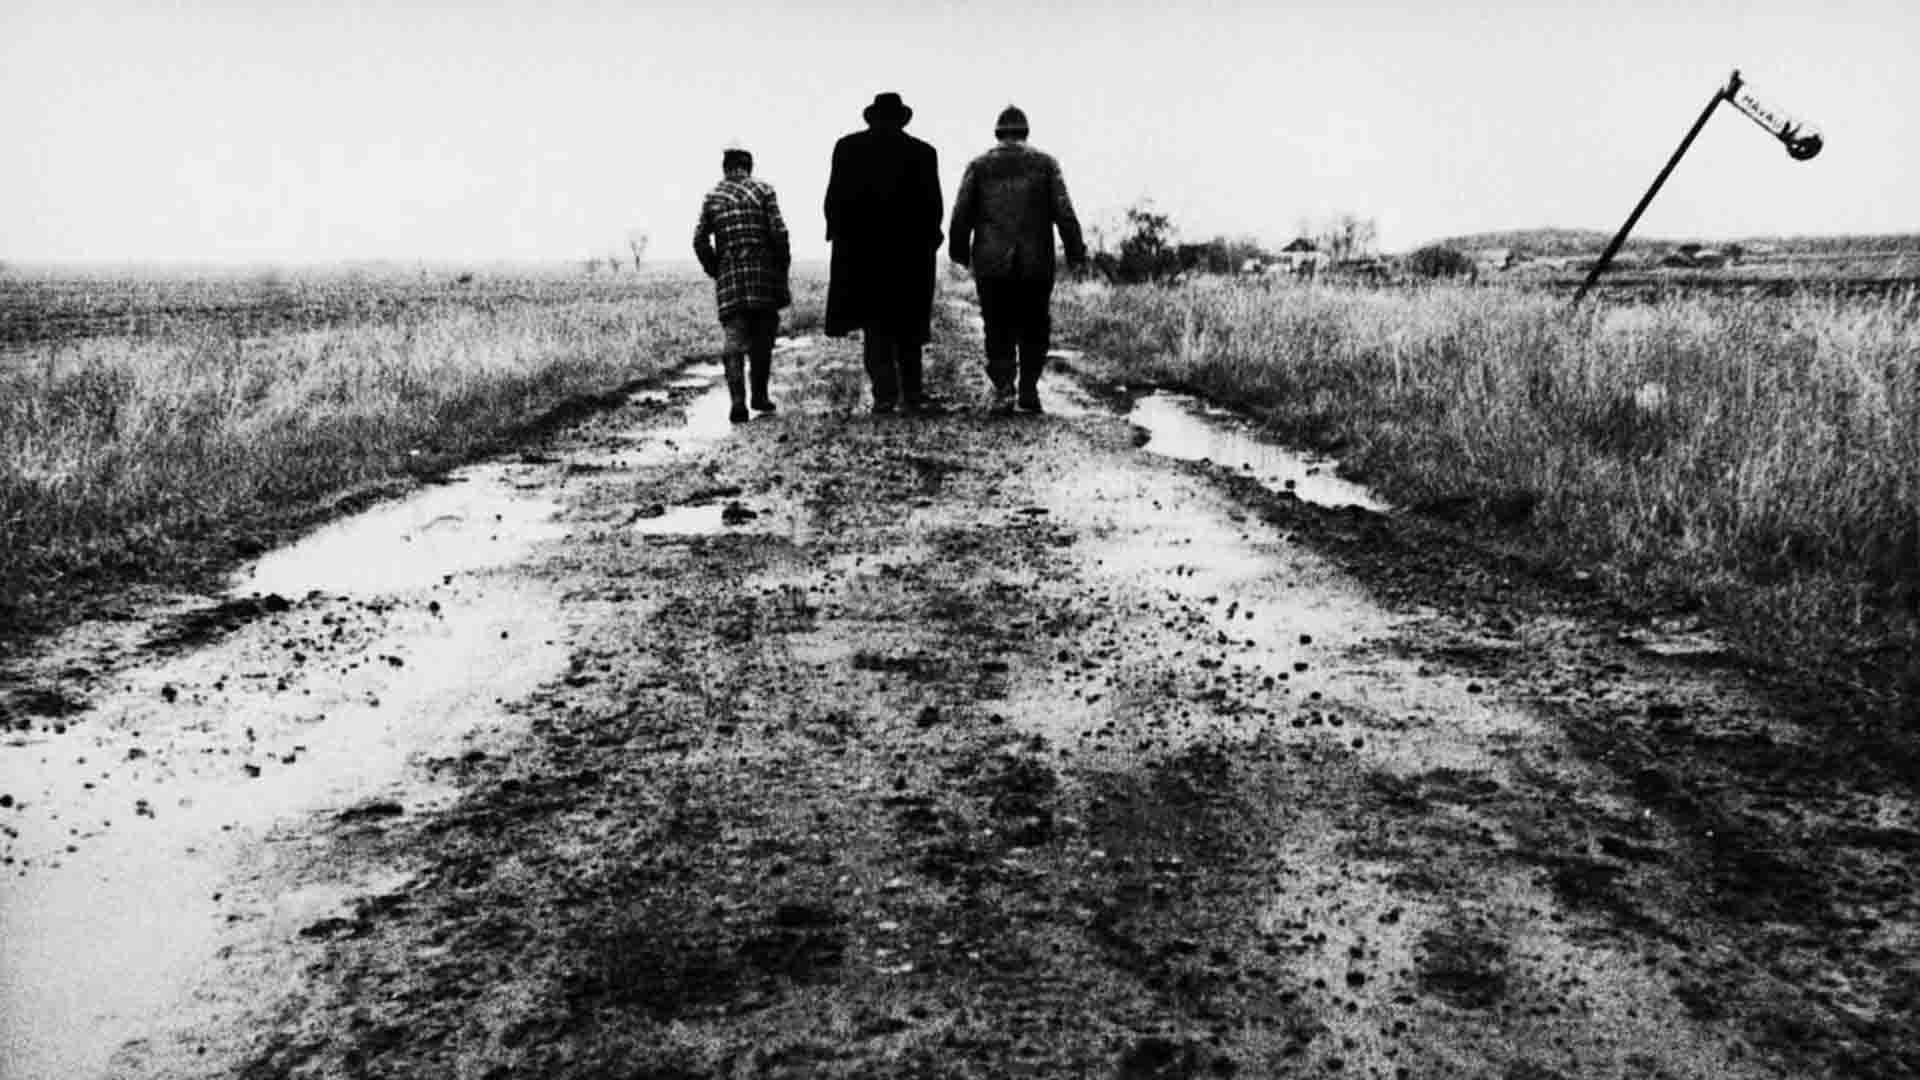 Several people walking in the mud in the movie Sátántangó